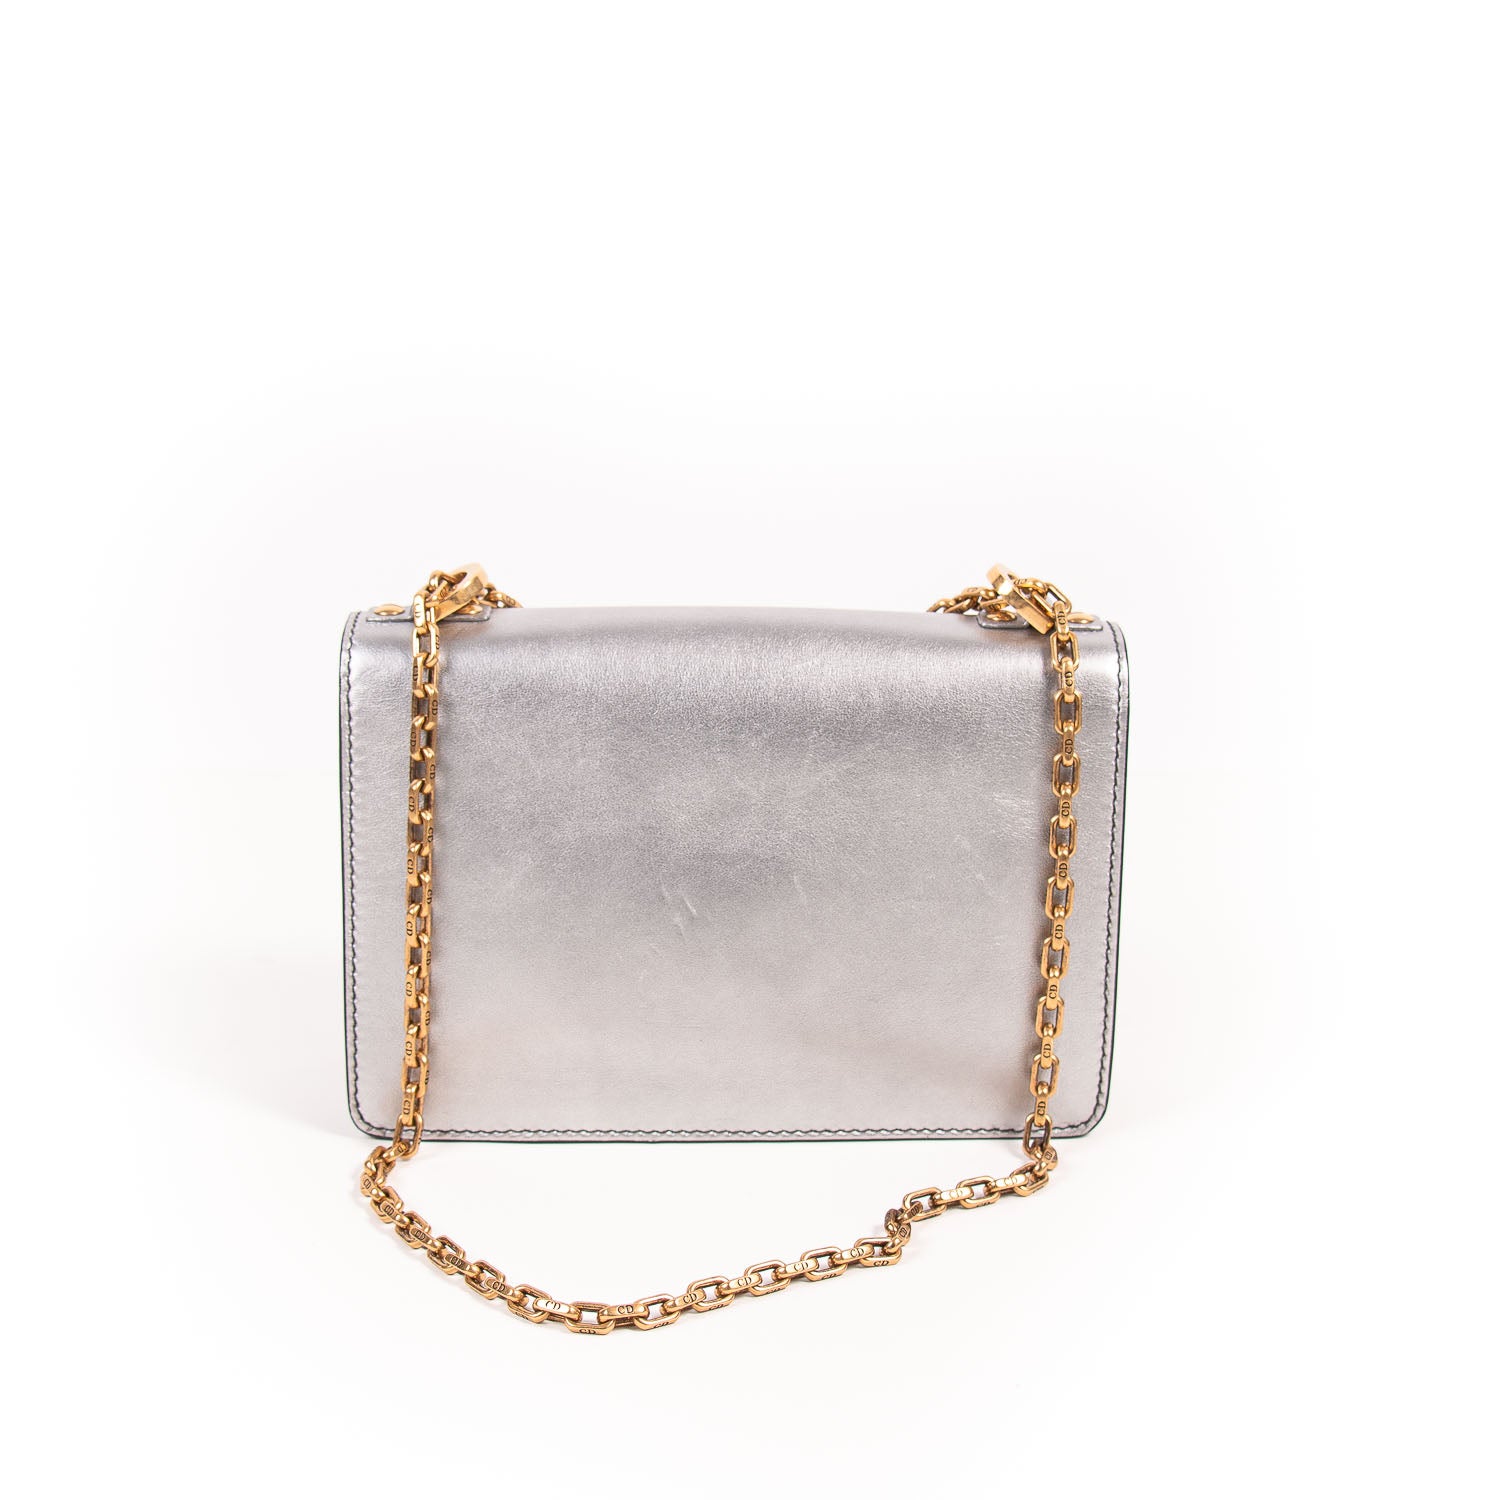 Shop authentic Christian Dior J'adior Metallic Bag at revogue for just ...